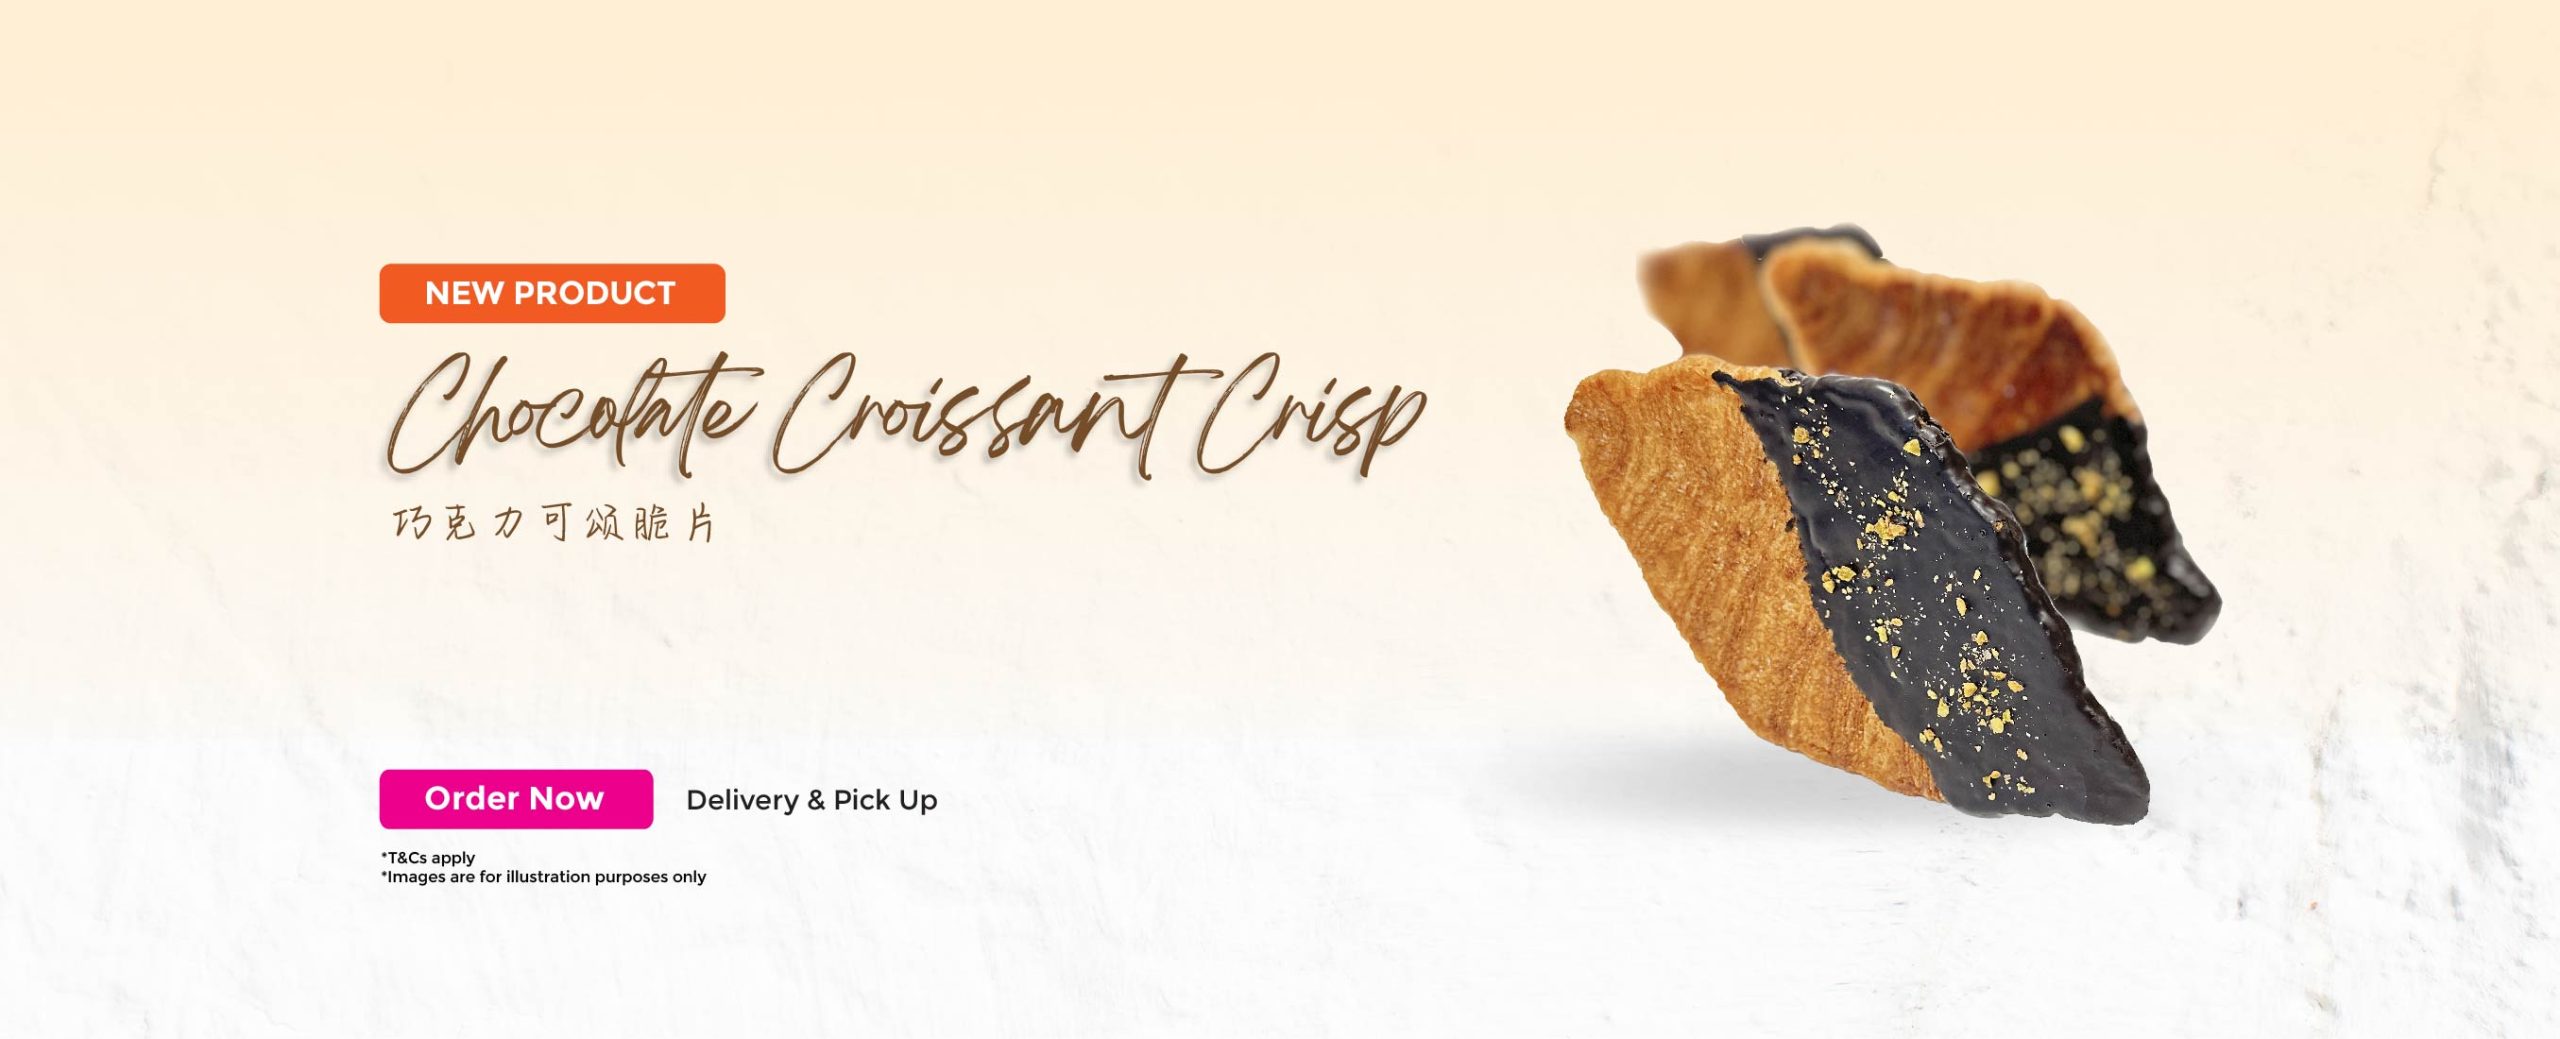 Chocolate Croissant Crisp web banner-01